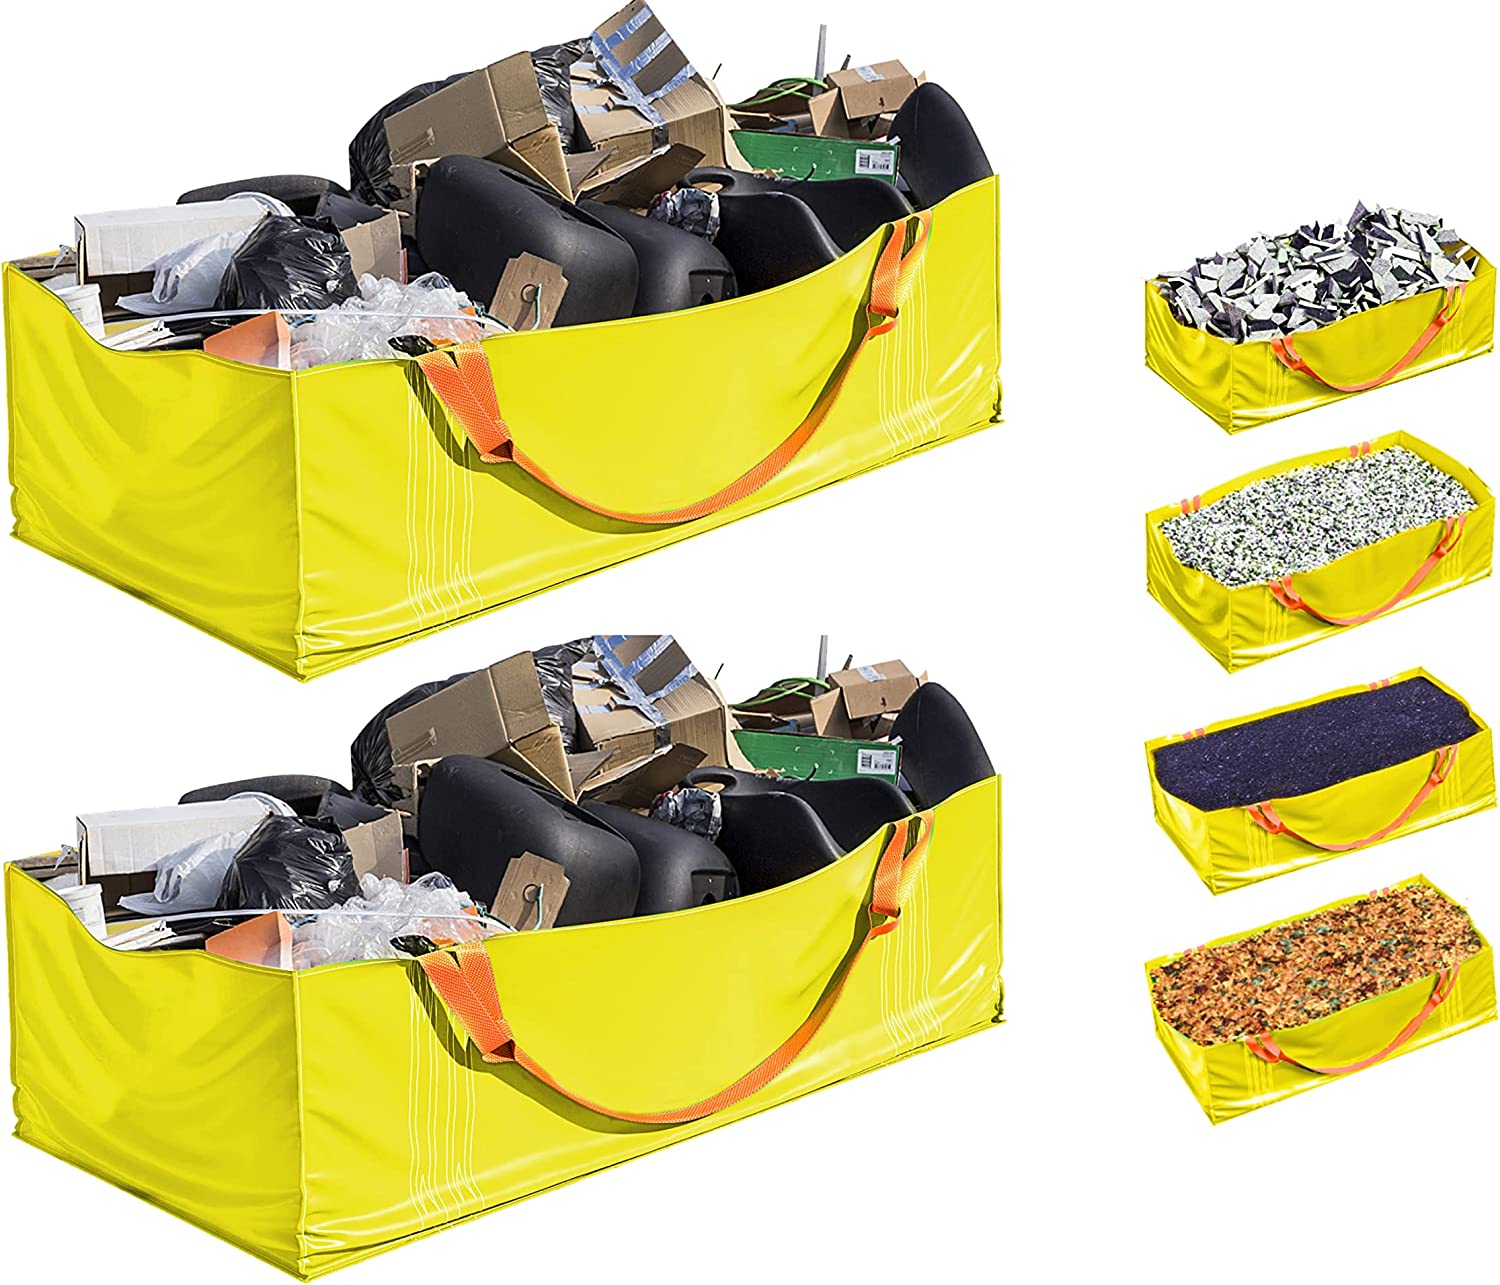 Reusable Dumpster Bags - Concord Carpenter